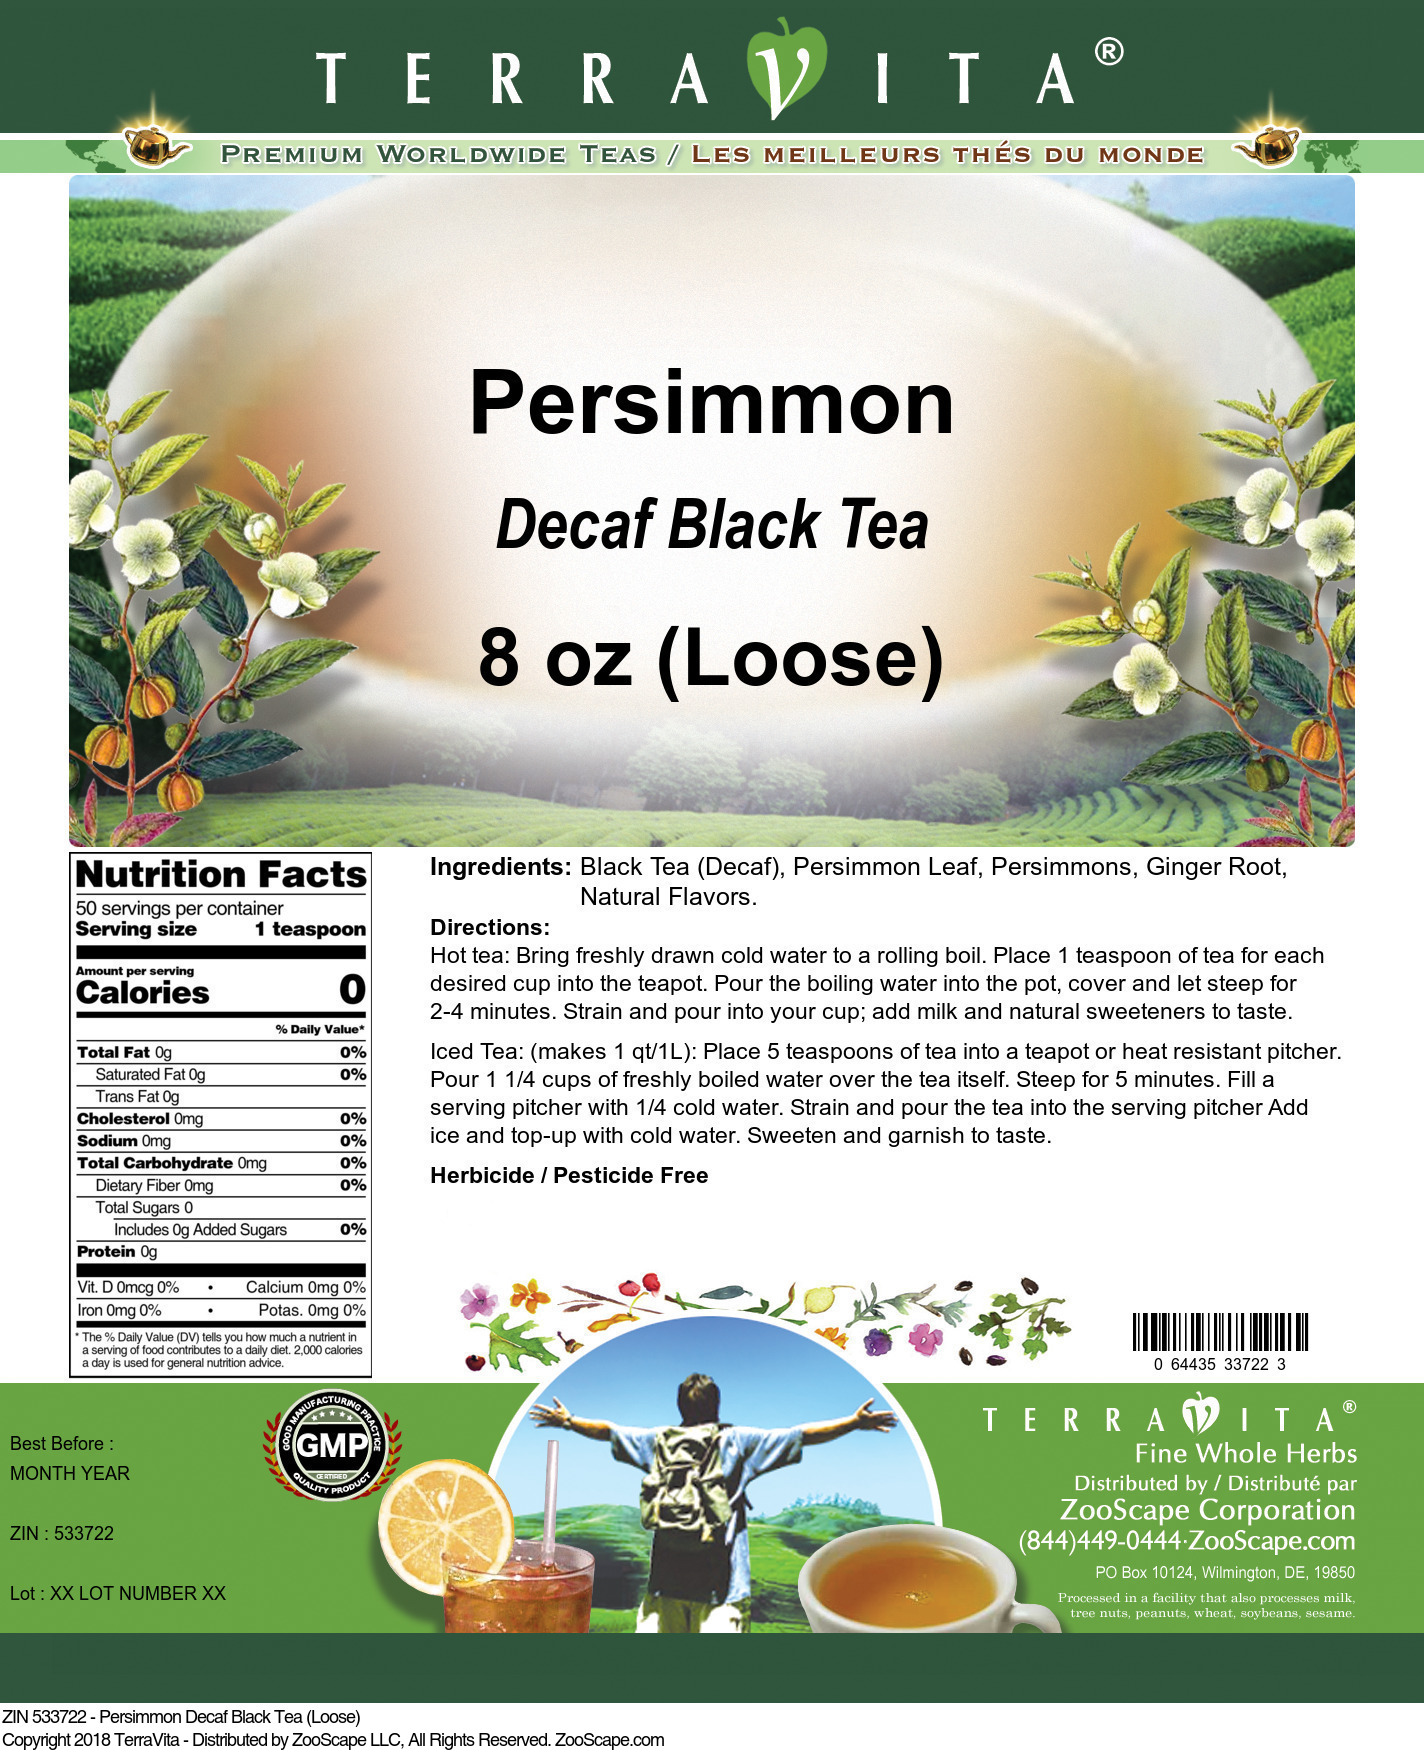 Persimmon Decaf Black Tea (Loose) - Label